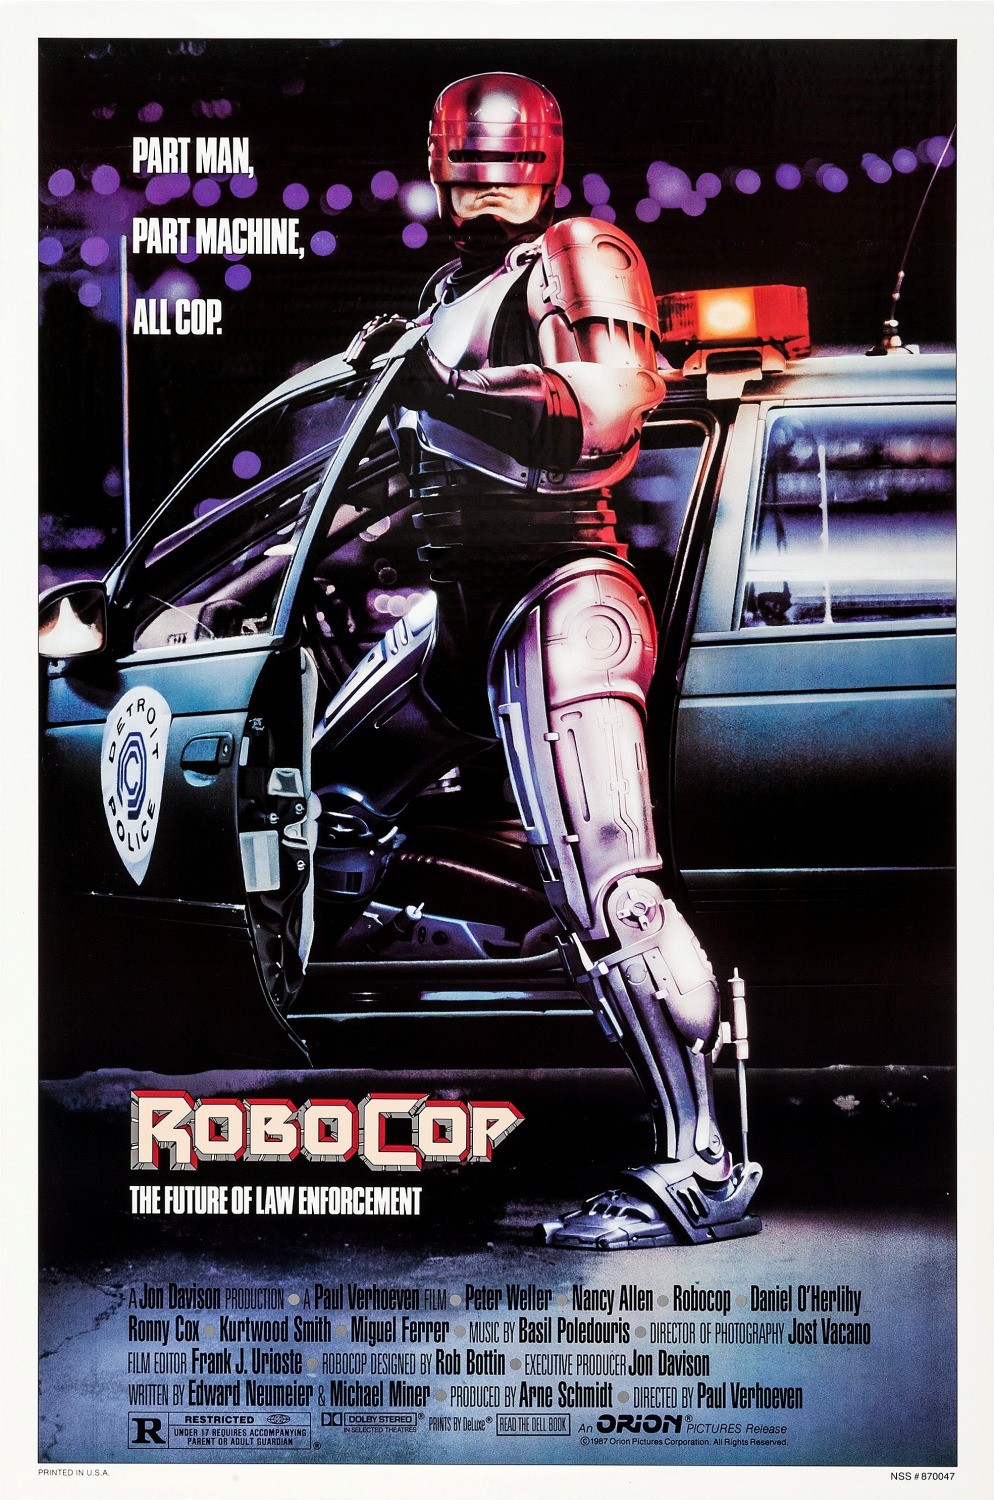 ROBOCOP [Director's Cut]